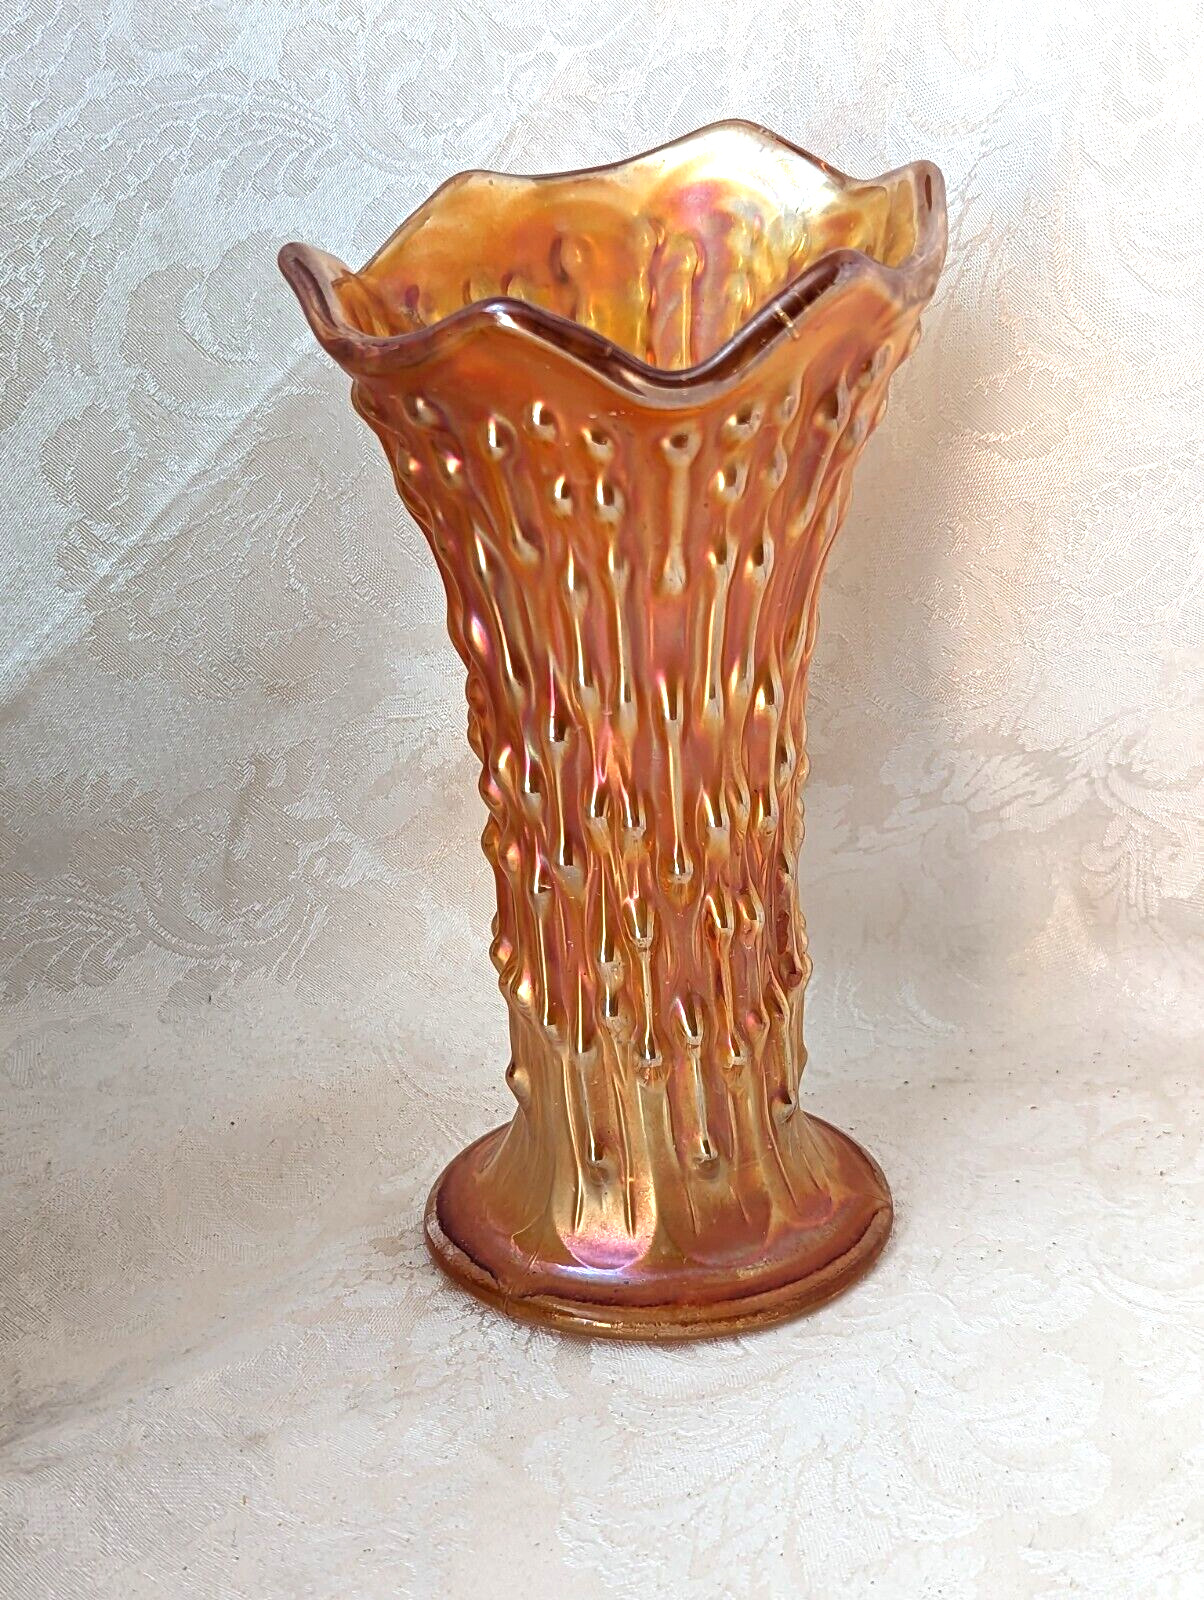 Antique Fenton April Showers Marigold Carnival Iridescent Glass Vase Ruffled Rim